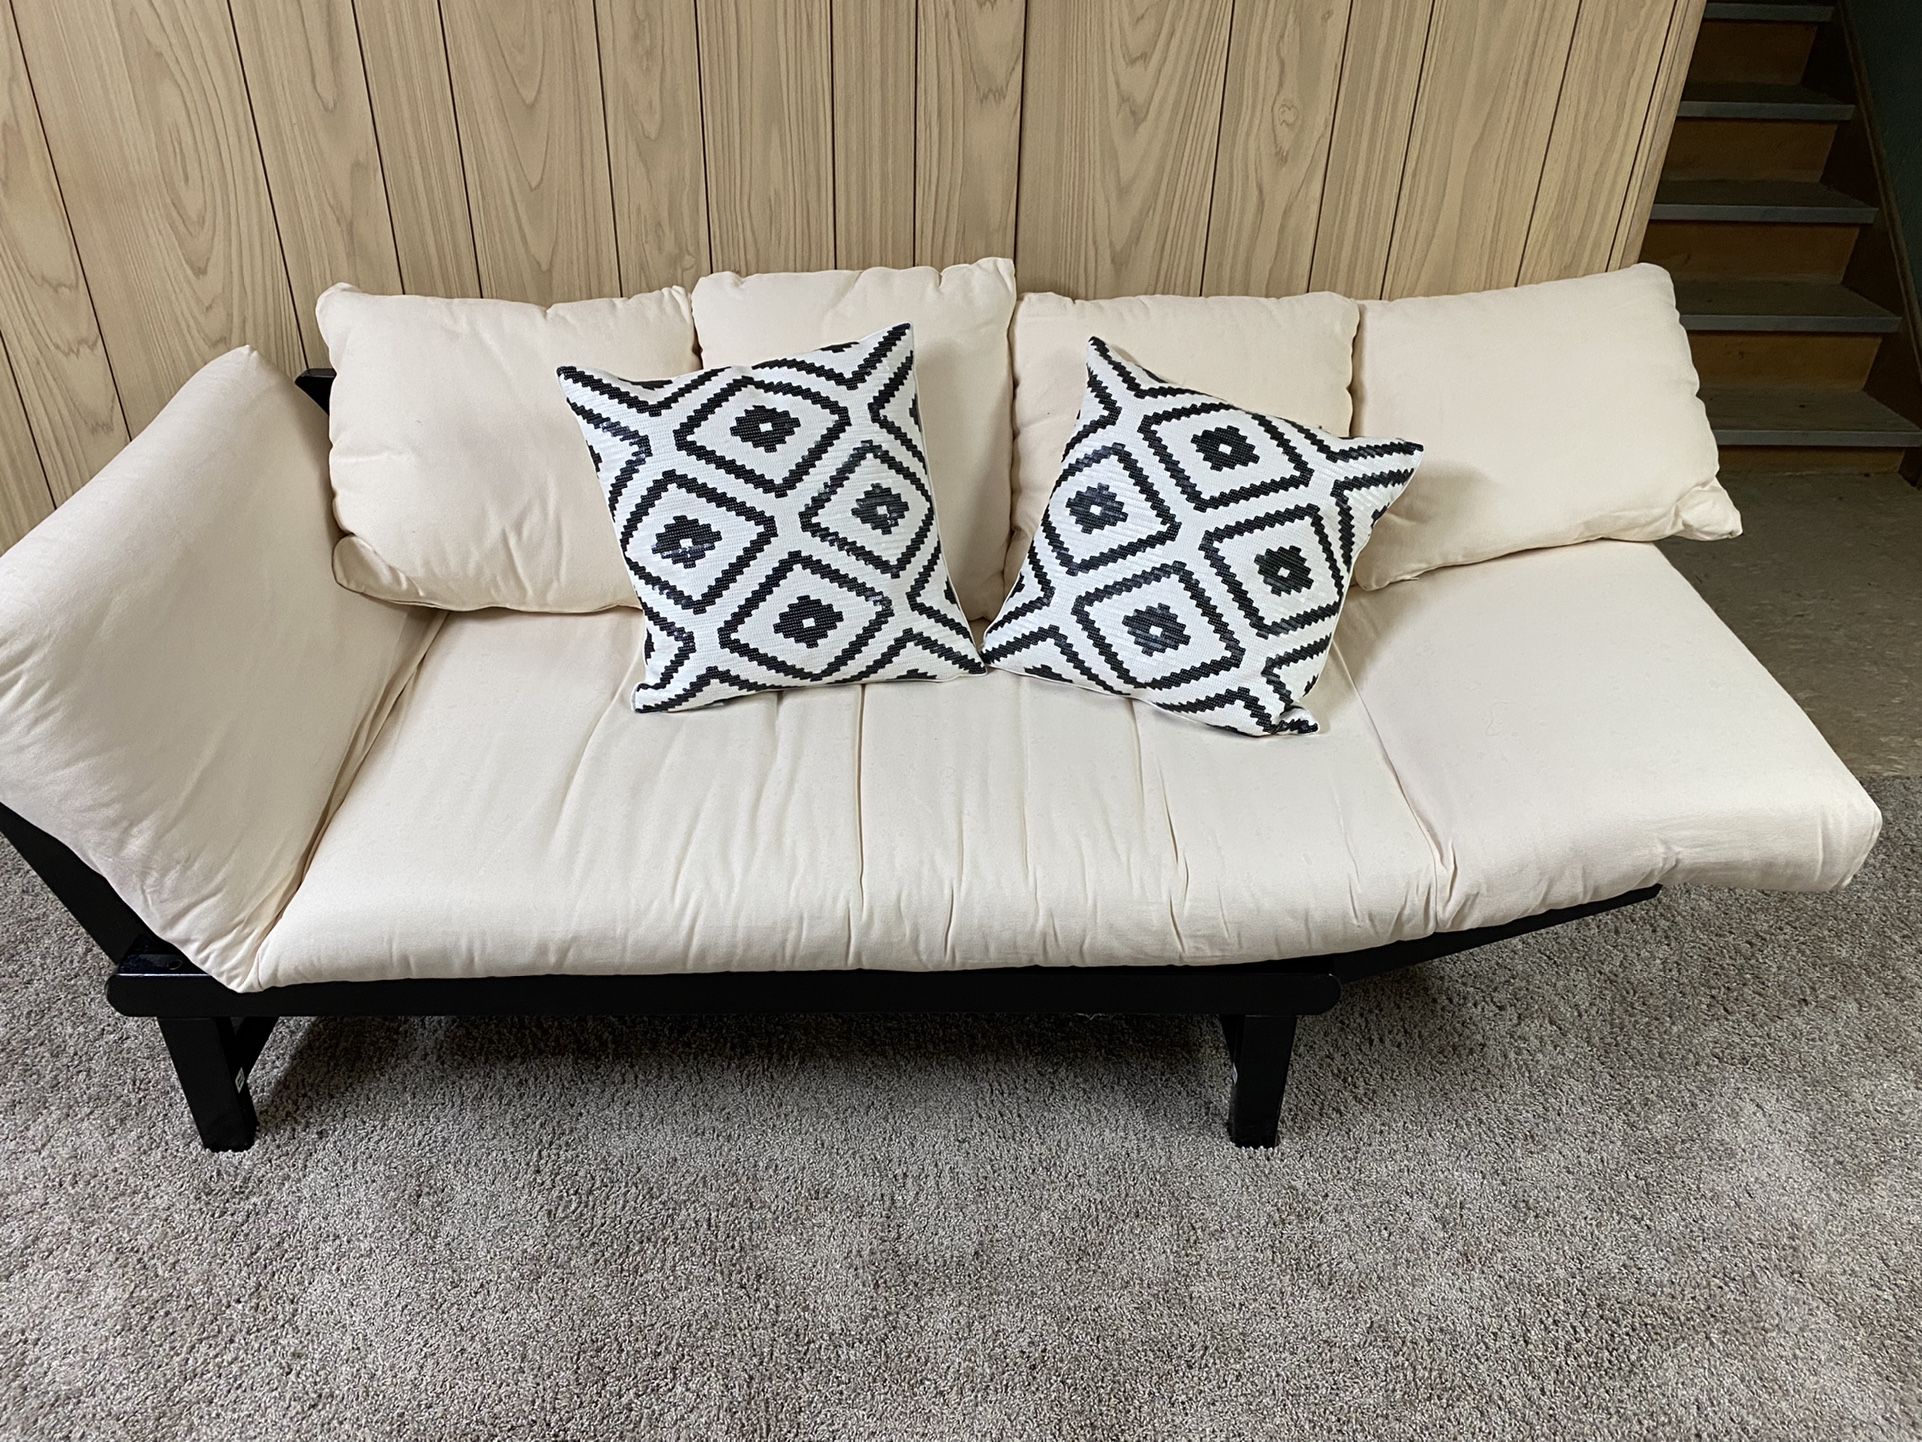 Futon(cream Pillows/black Frame) and Accent Pillows